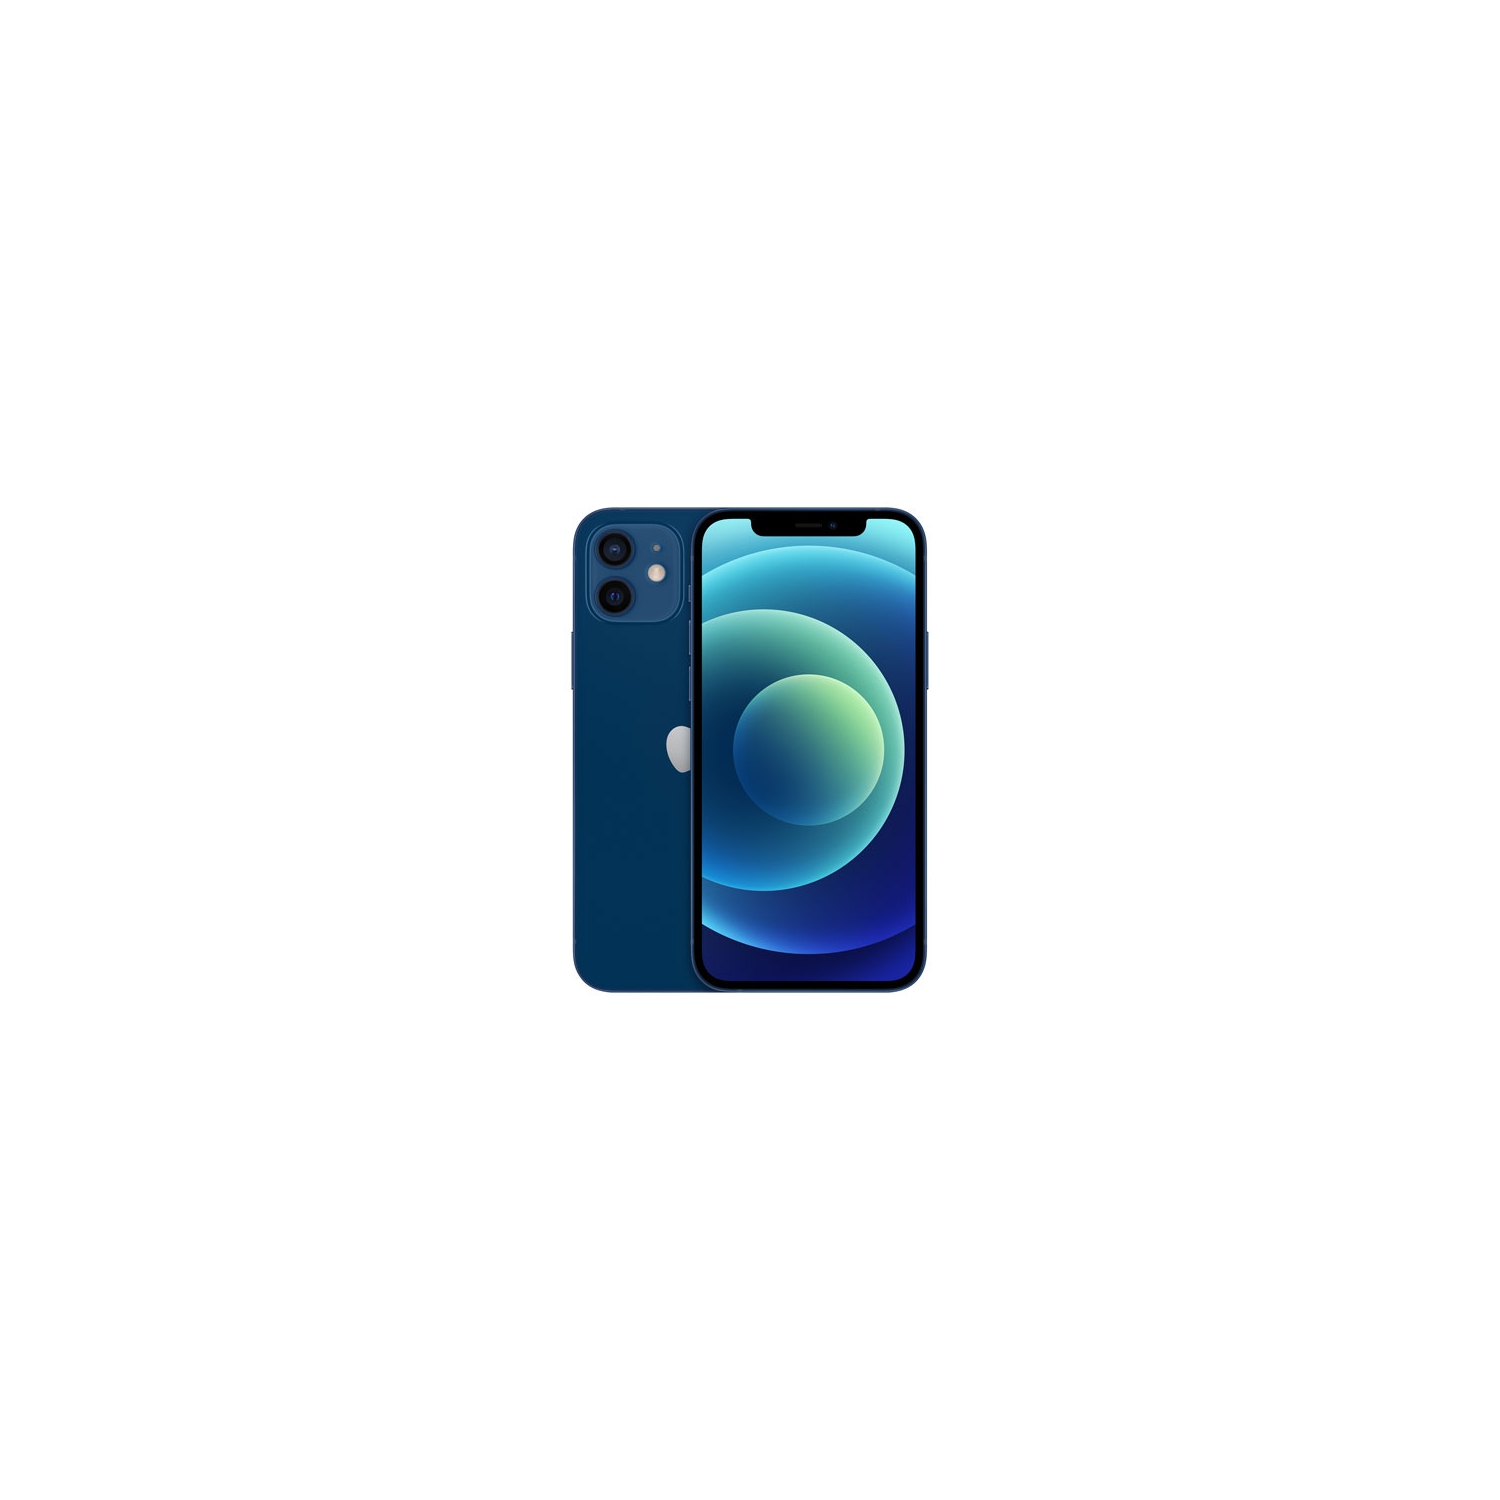 Apple iPhone 12 64GB Smartphone - Blue - Unlocked - Open Box